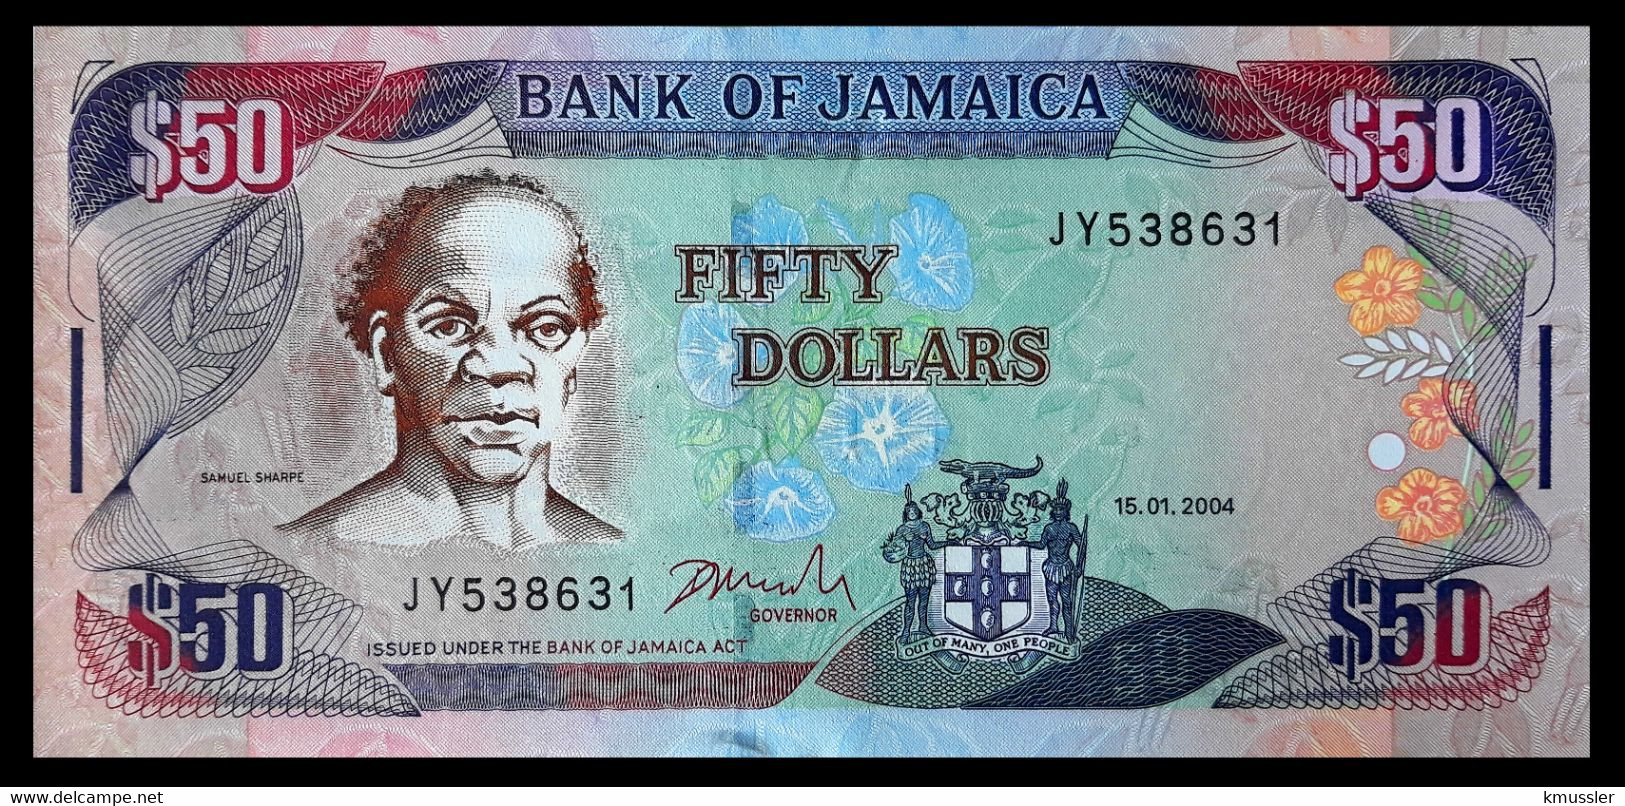 # # # Banknote Aus Jamaika (Jamaica) 50 Dollars 2004 UNC # # # - Jamaique